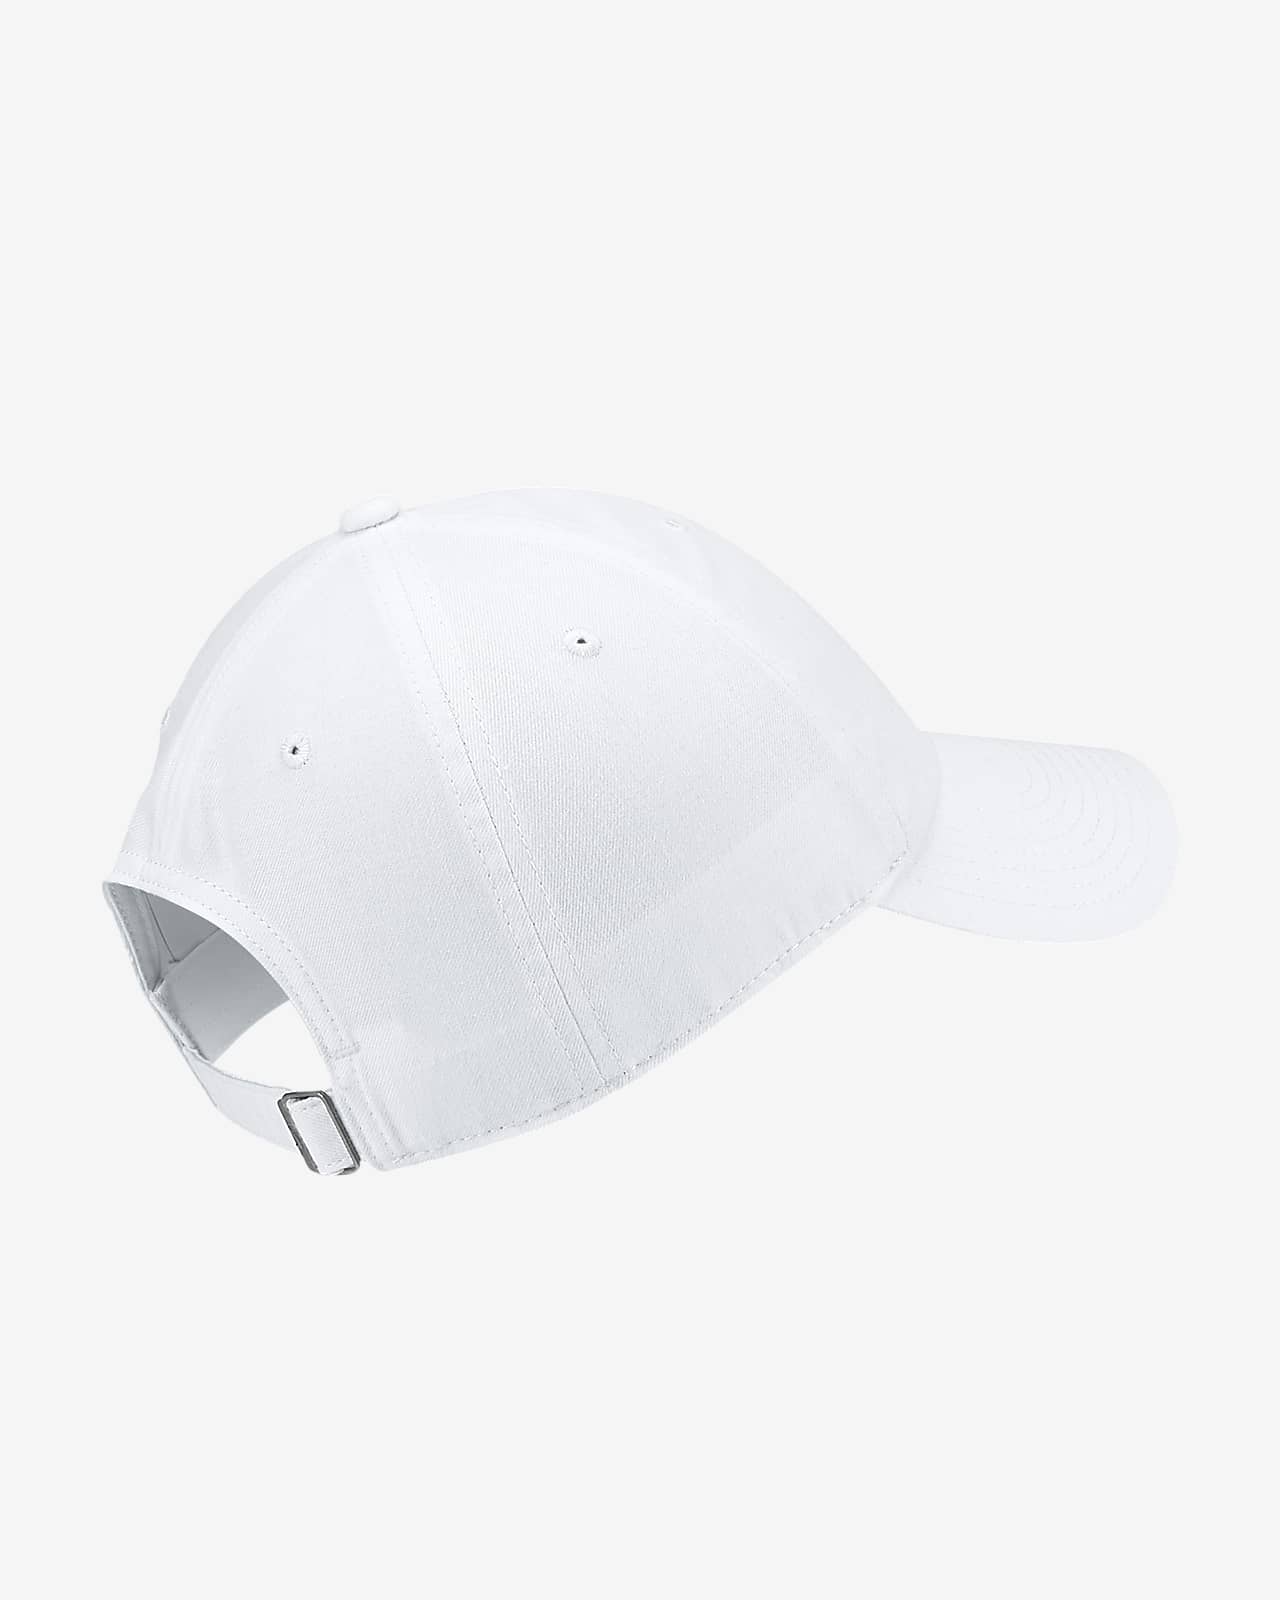 Nike Sports Heritage 86 Futura Wash Cap White - (913011 100) - F